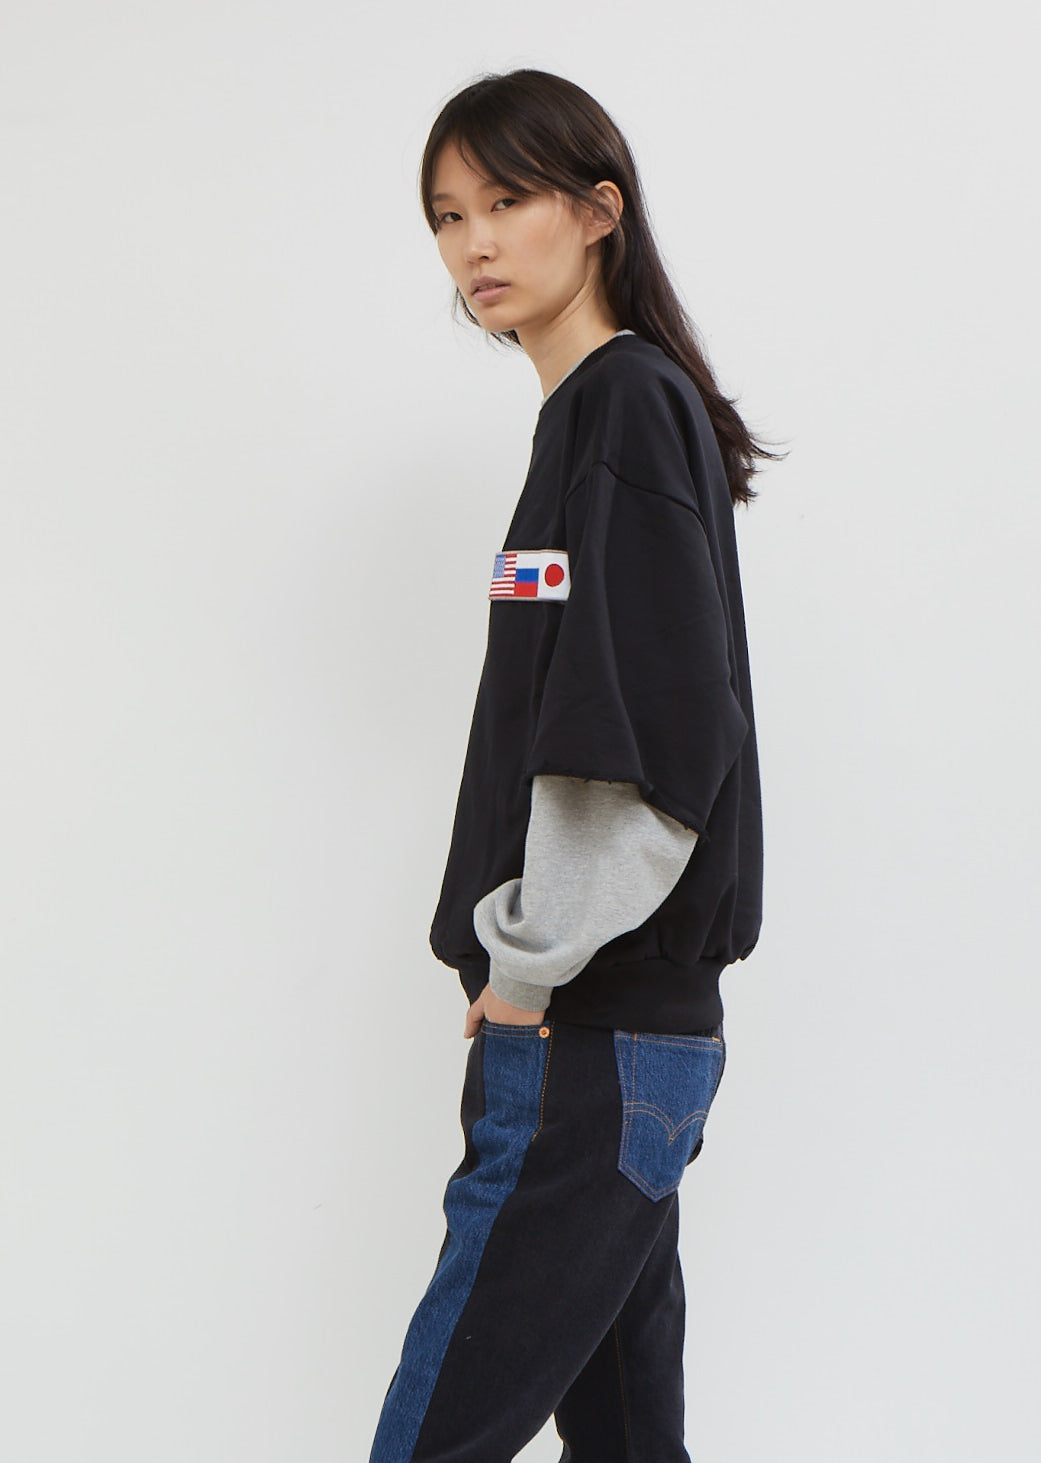 Carhartt Sweatshirt & Gosha Rubchinskiy Suspenders – Tokyo Fashion